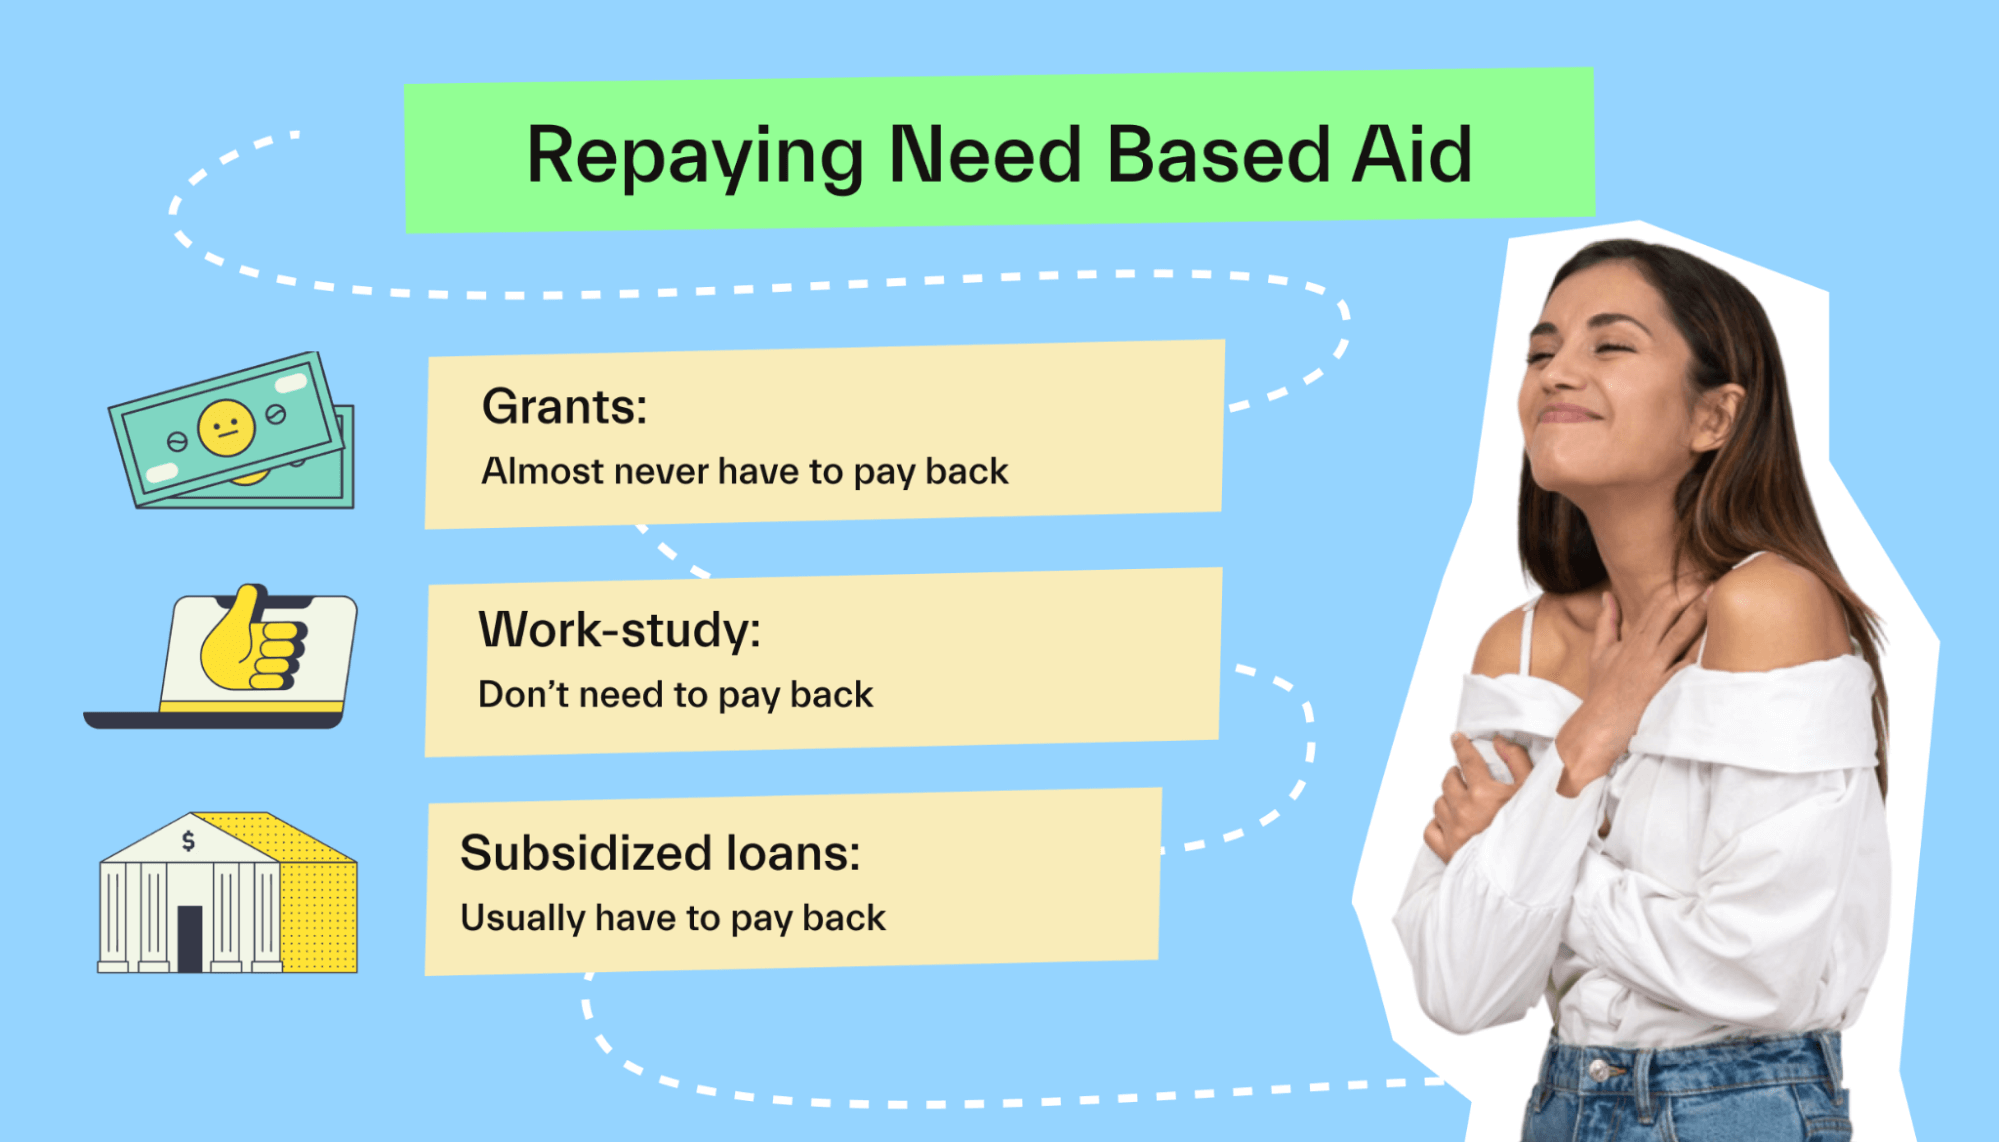 Repaying Need Based Aid